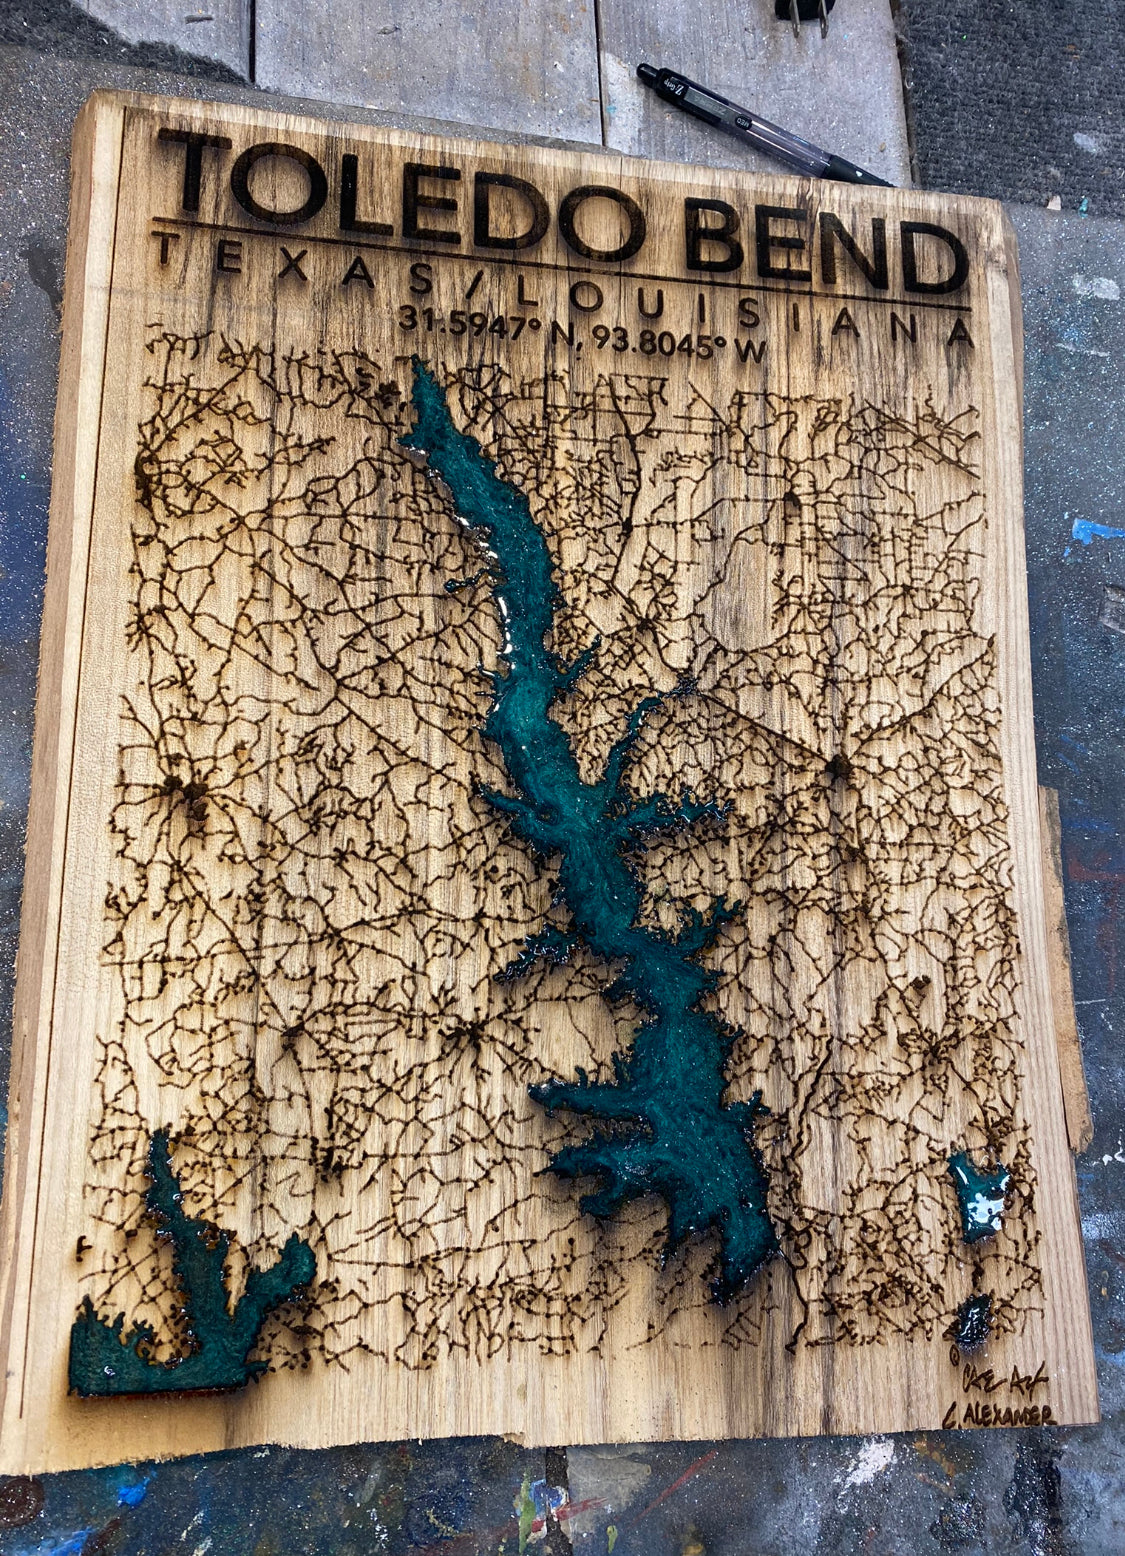 Toledo Bend Wood Engraving